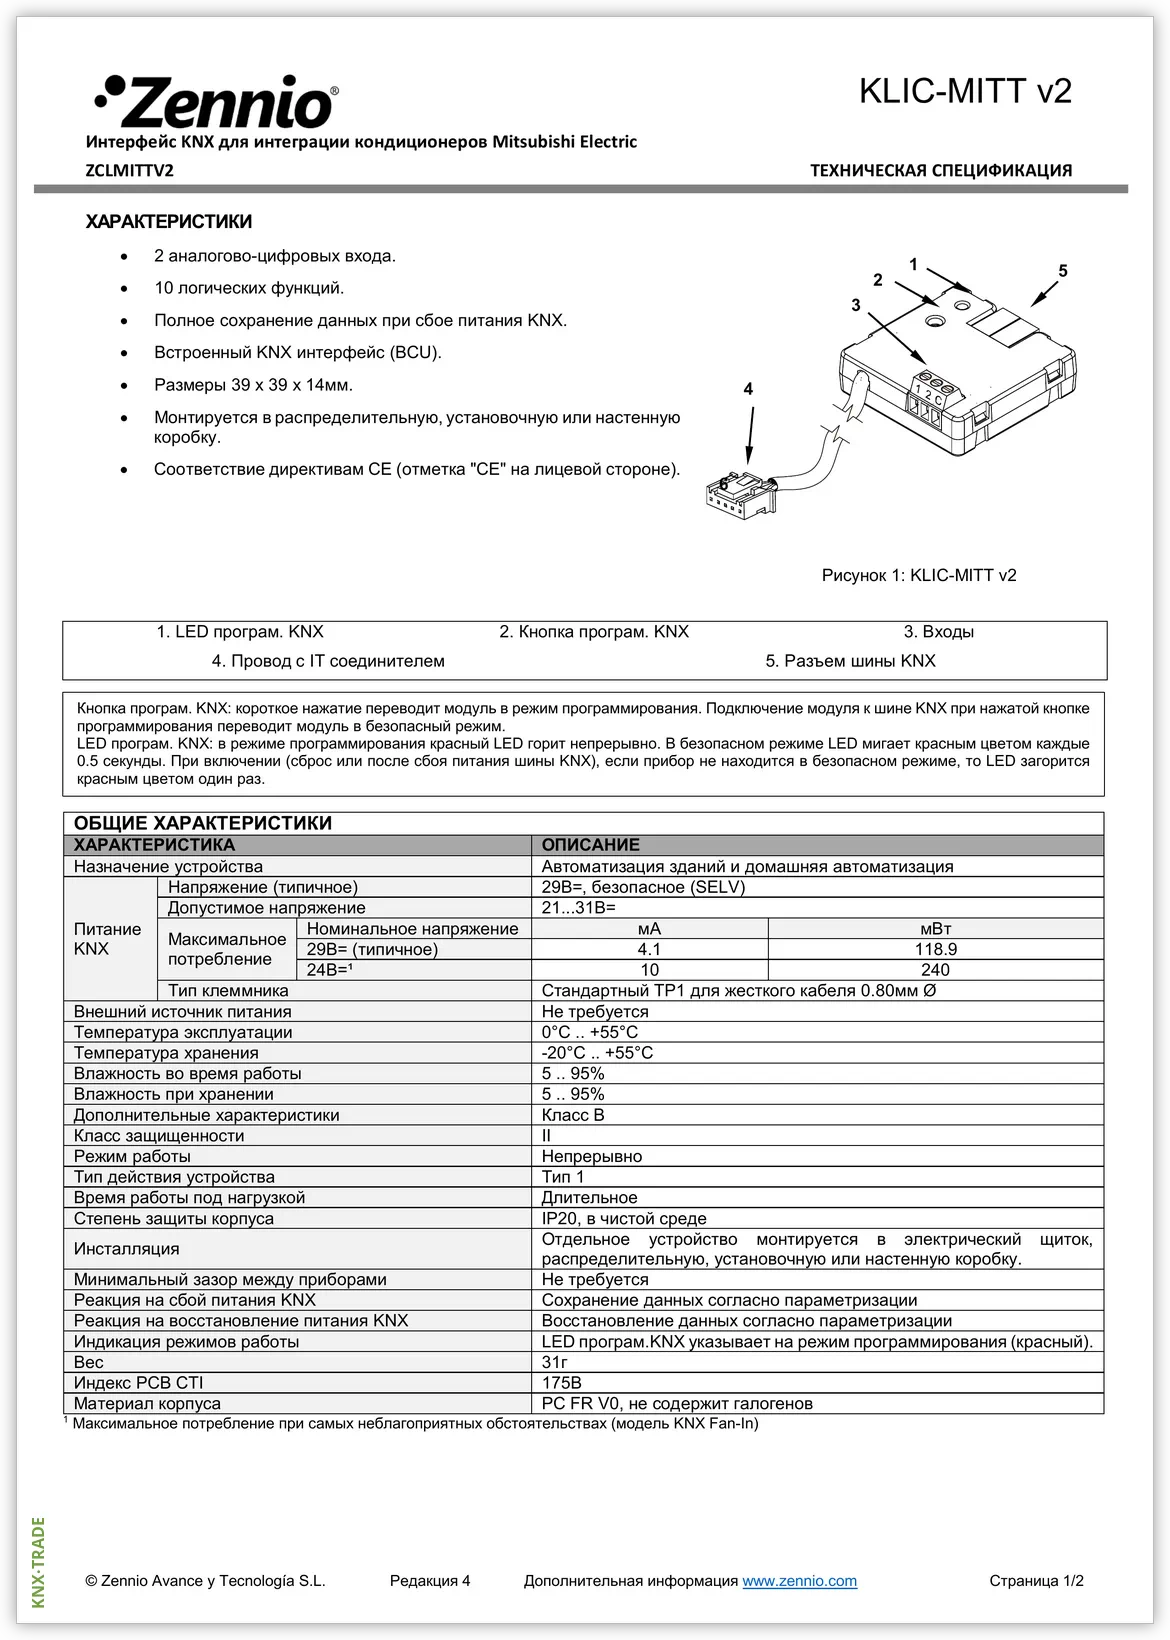 Datasheet (1) Zennio [ZCLMITTV2] KLIC-MITT v2 / Шлюз KNX-Mitsubishi Electric